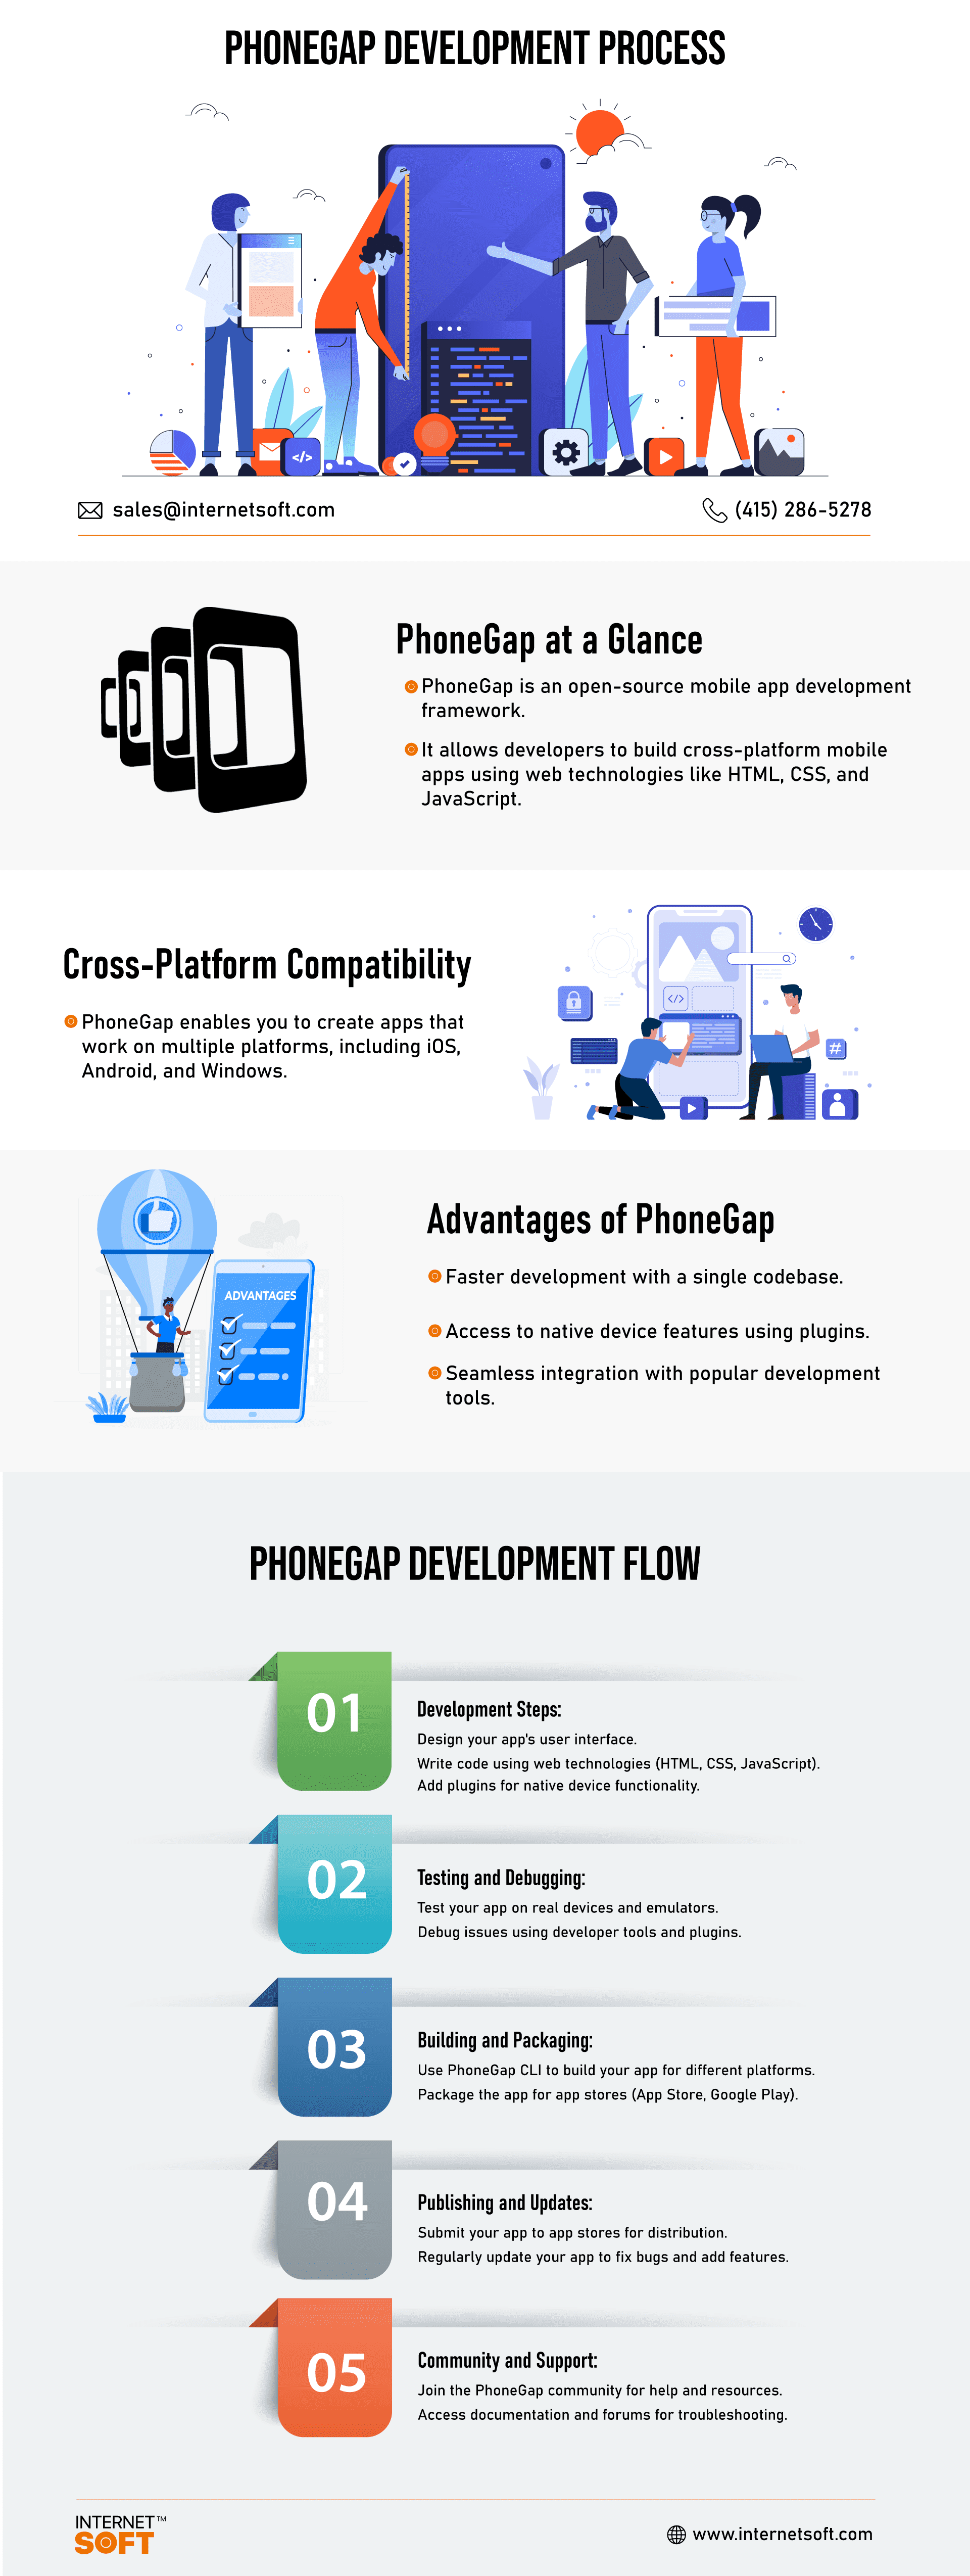 PhoneGap Development Process